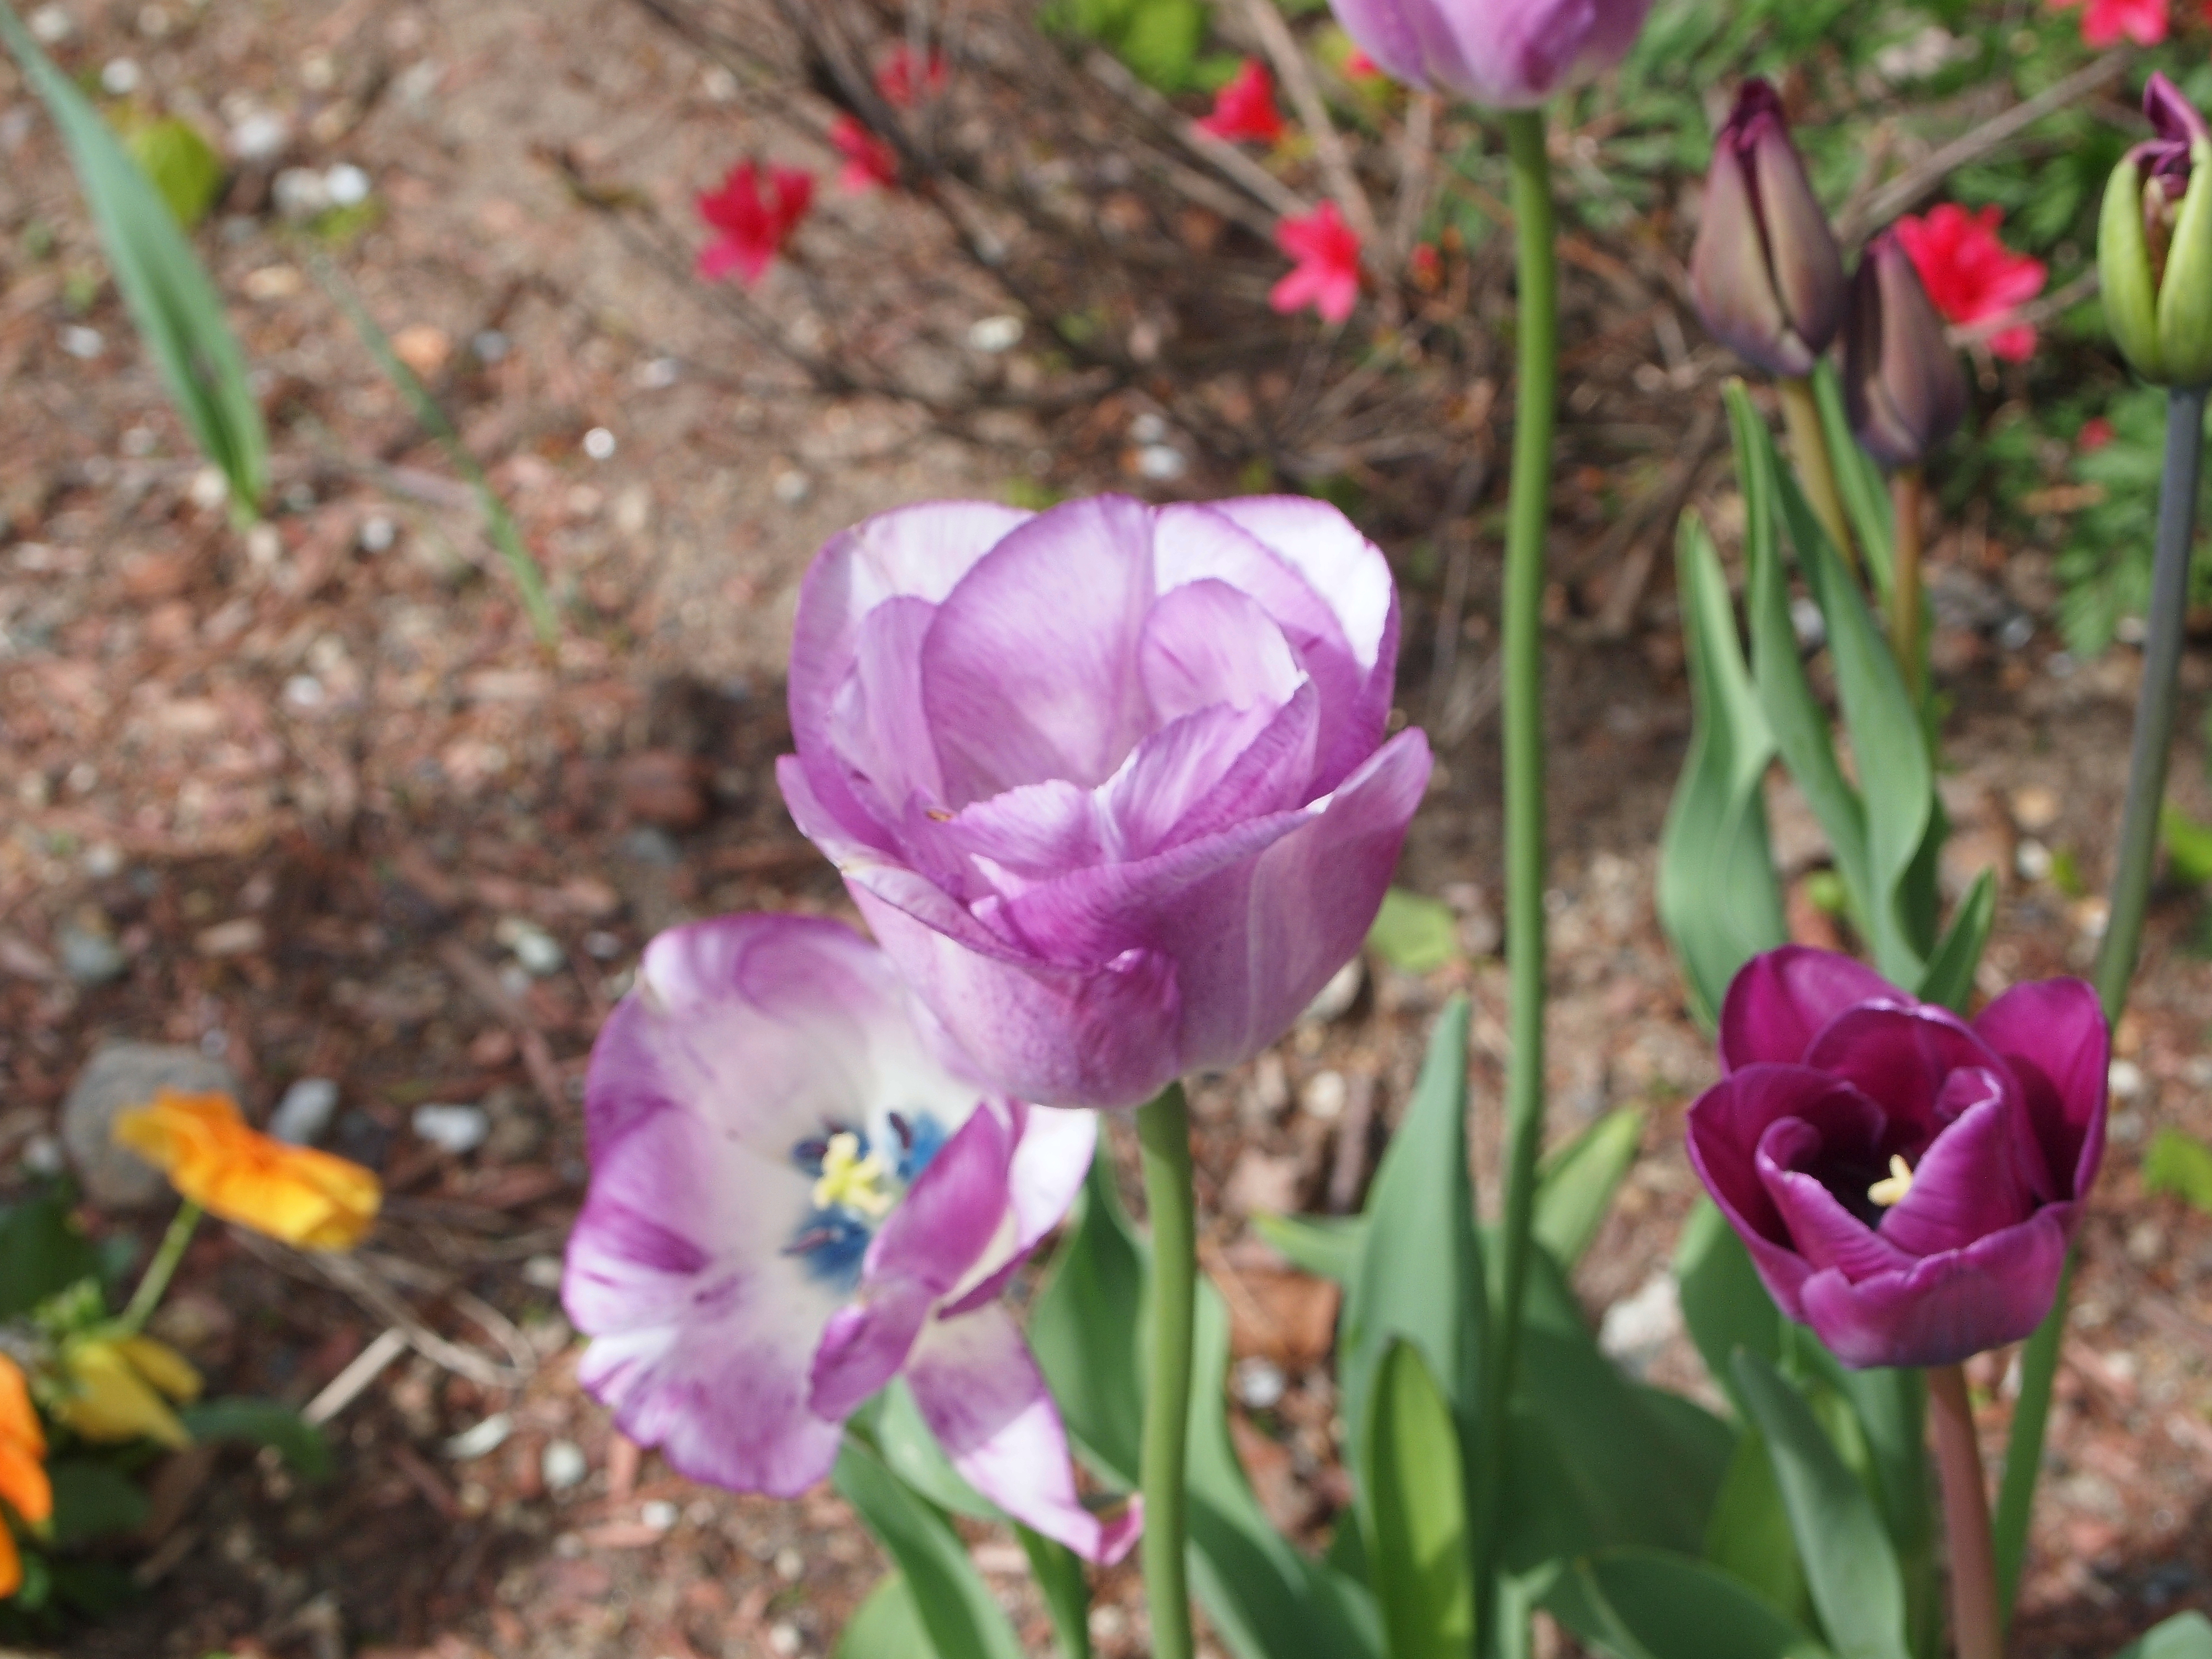 Purple tulips #3